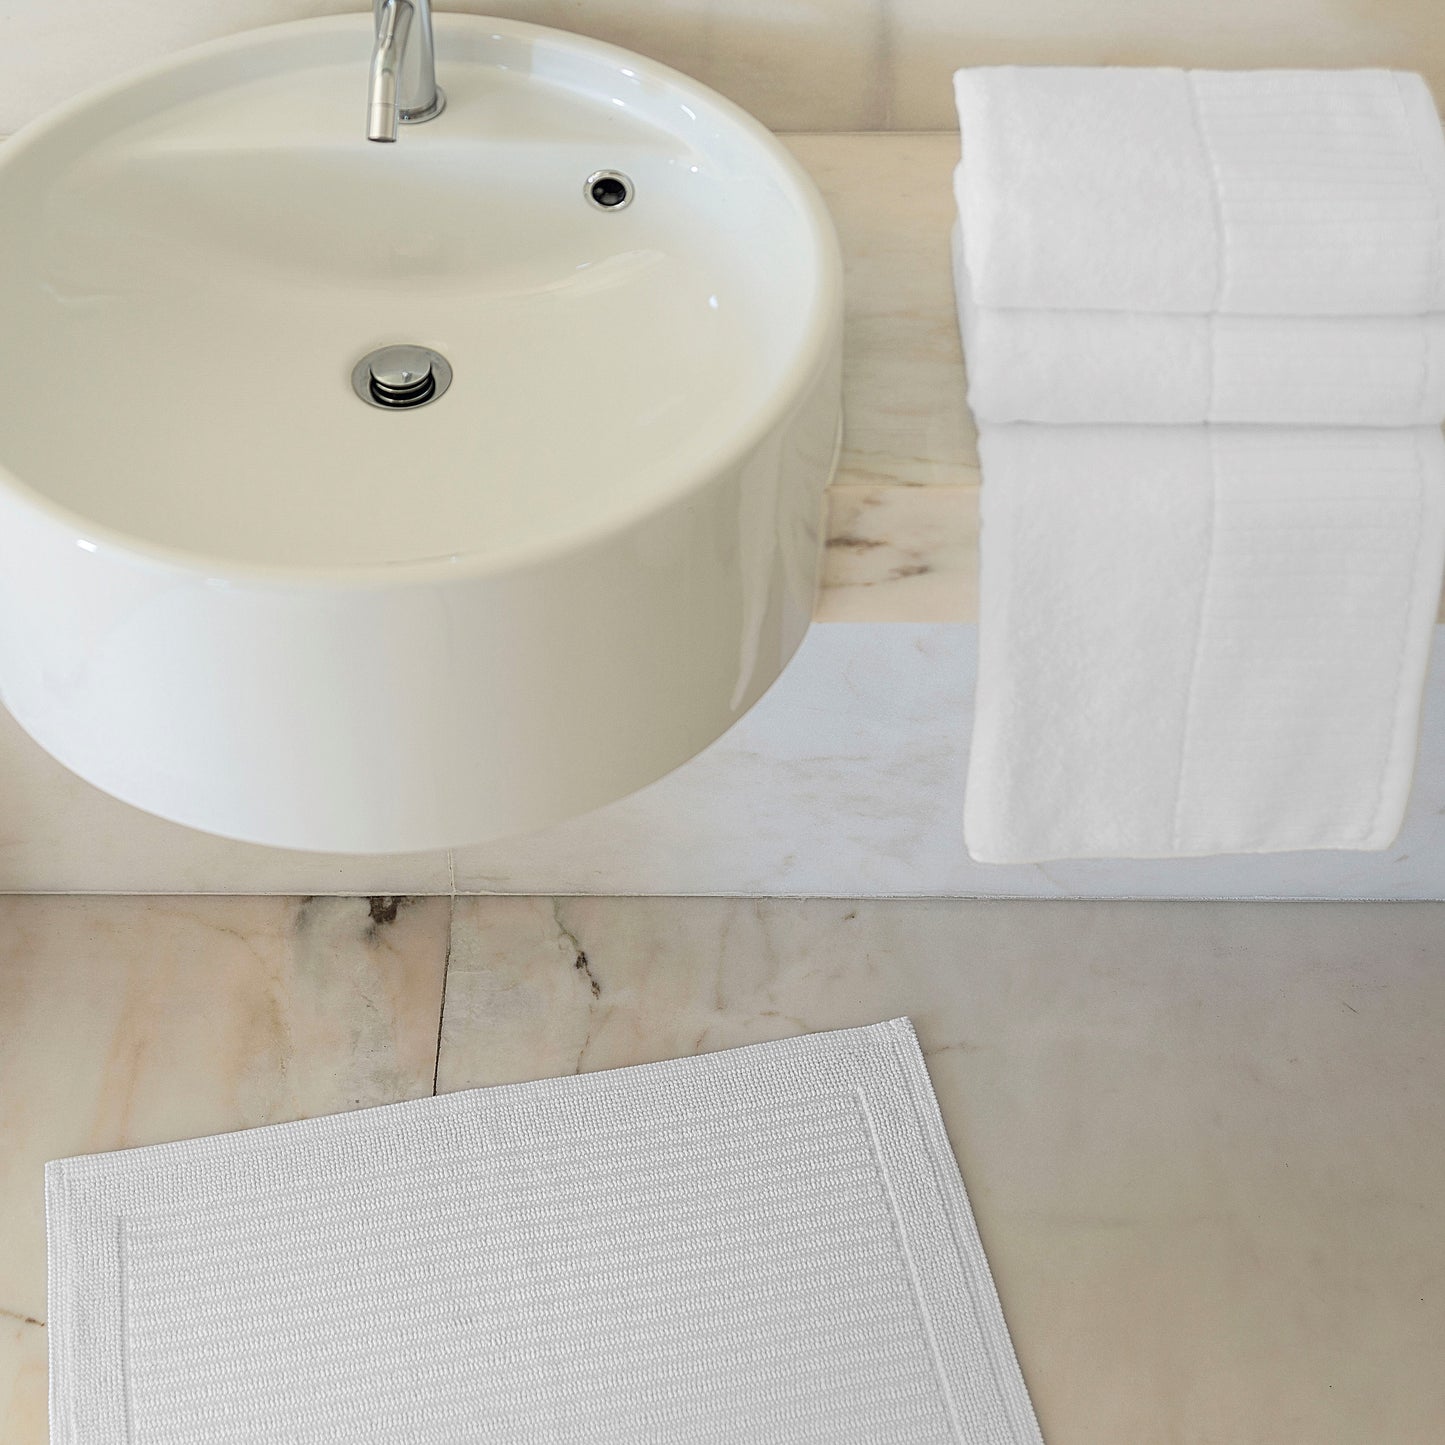 Classic Hotel Toweling Mat in Bathroom